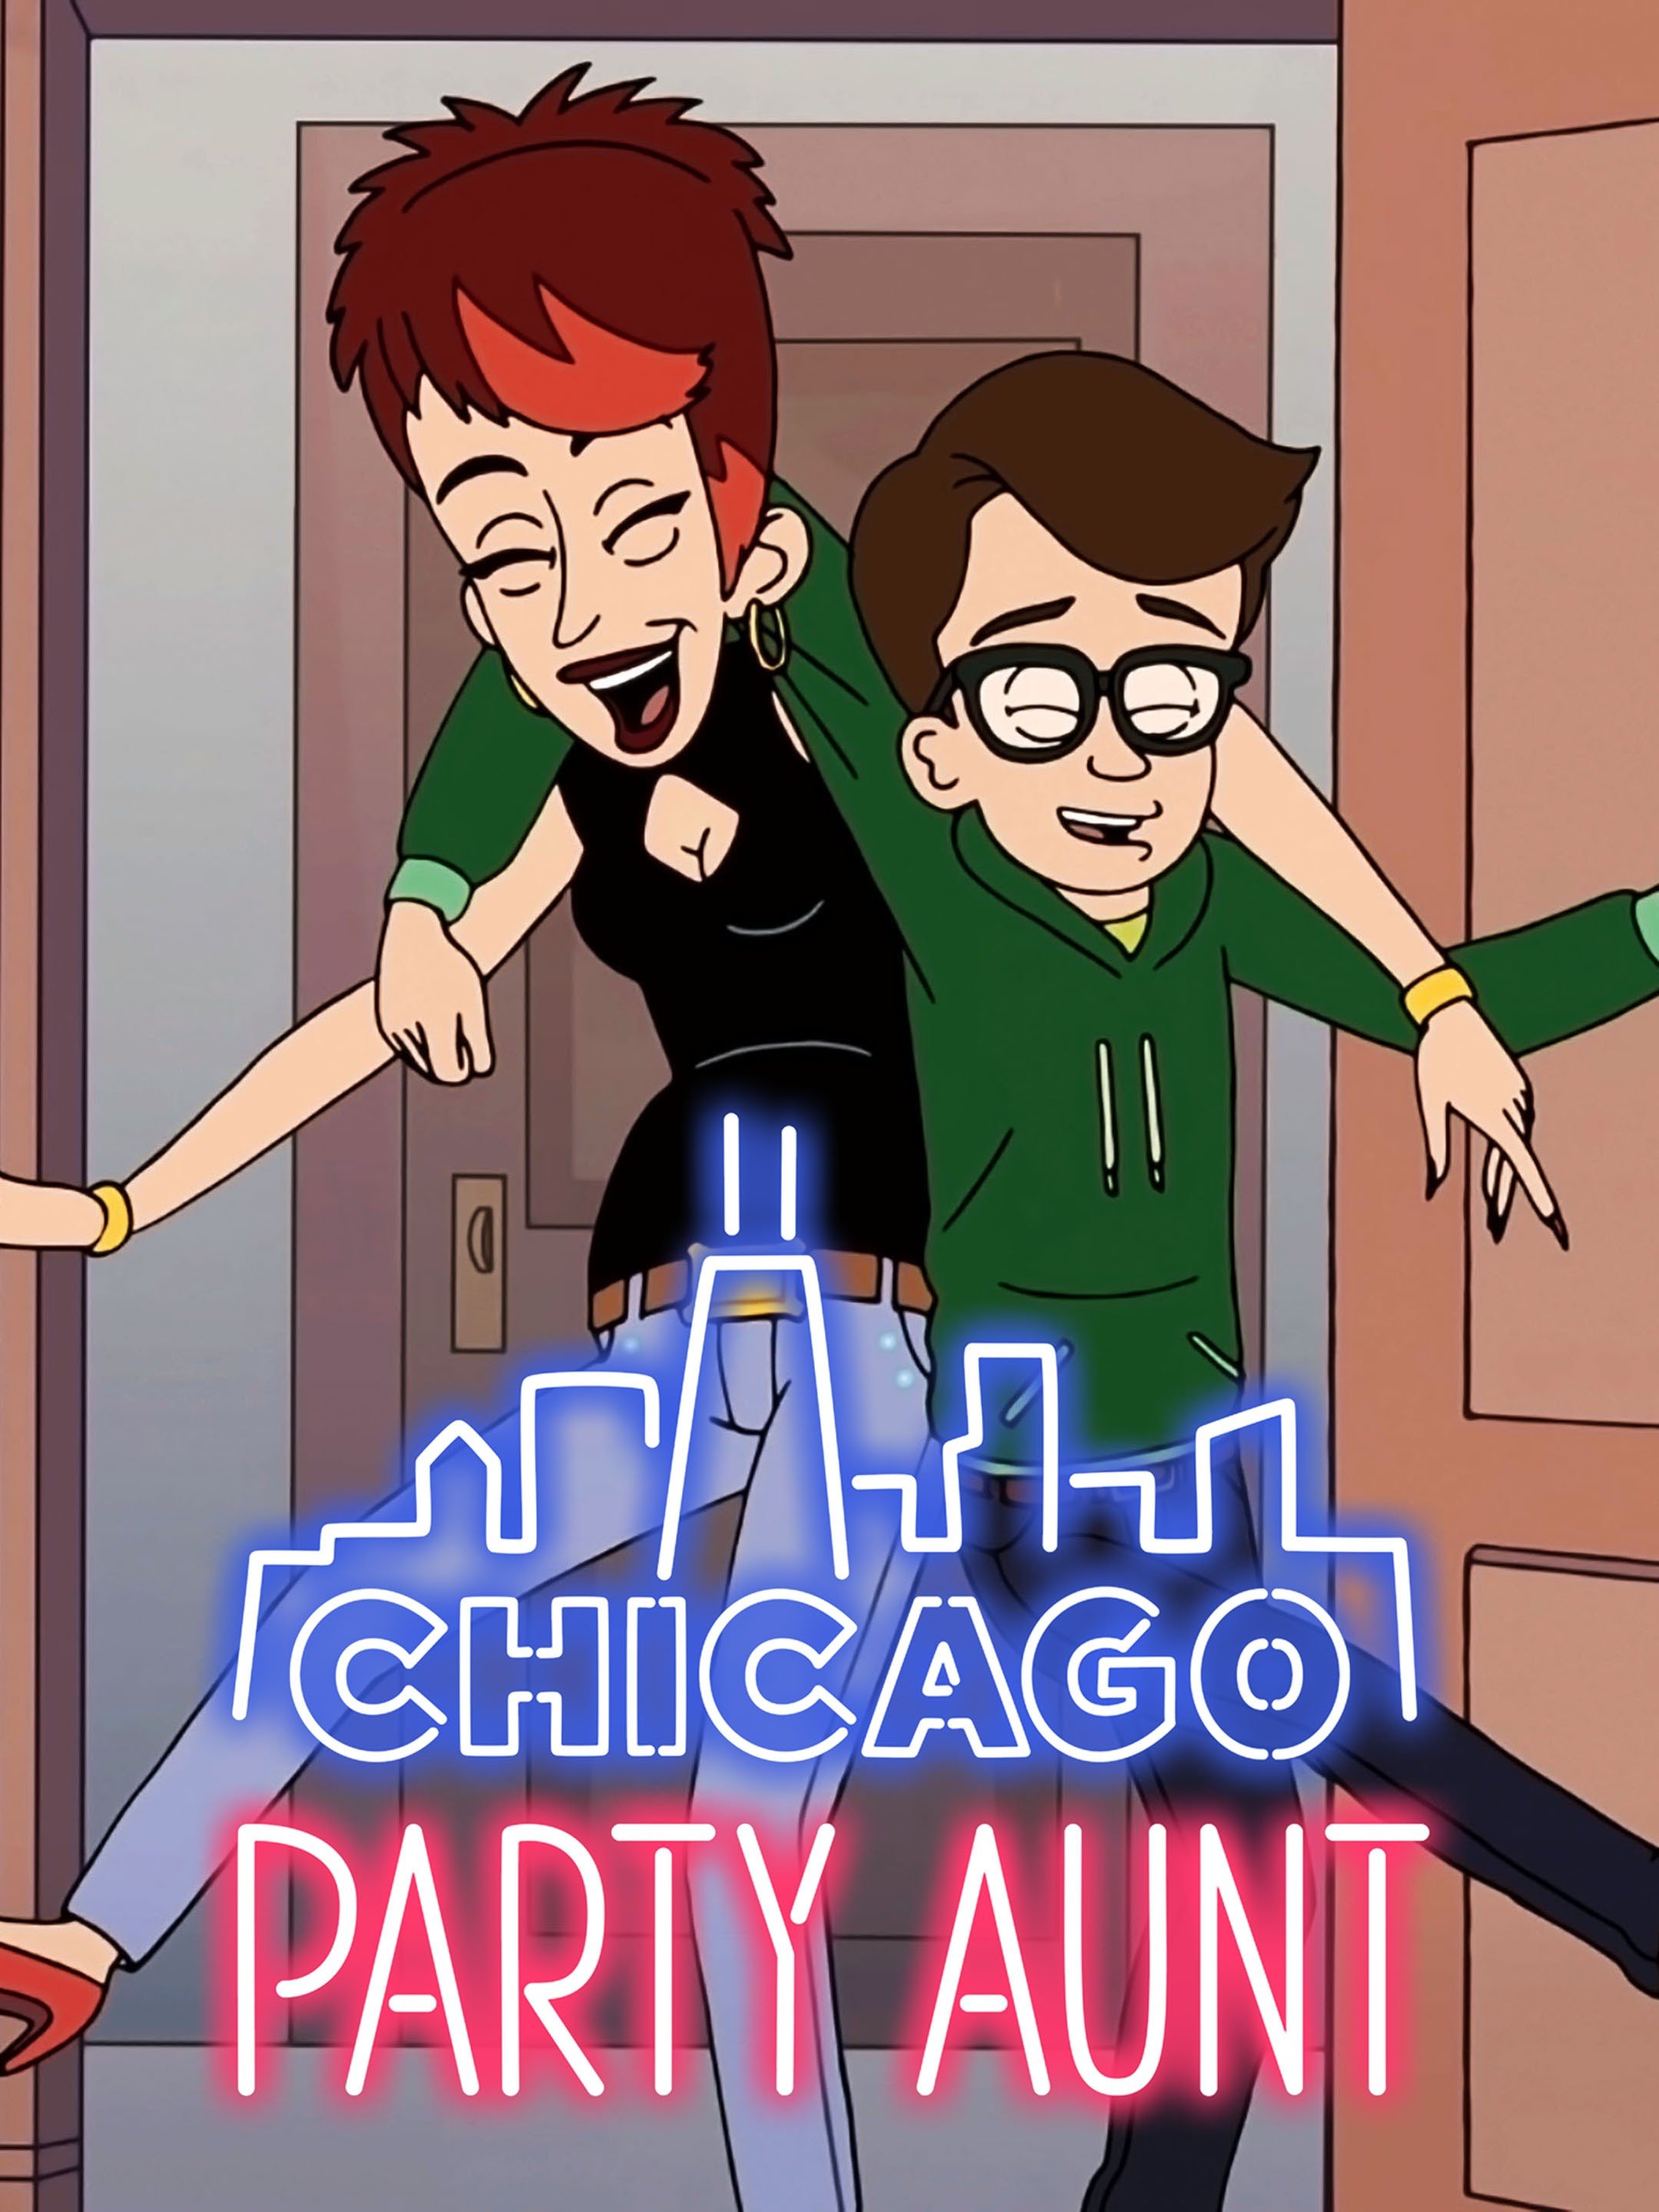 Chicago party aunt season 2